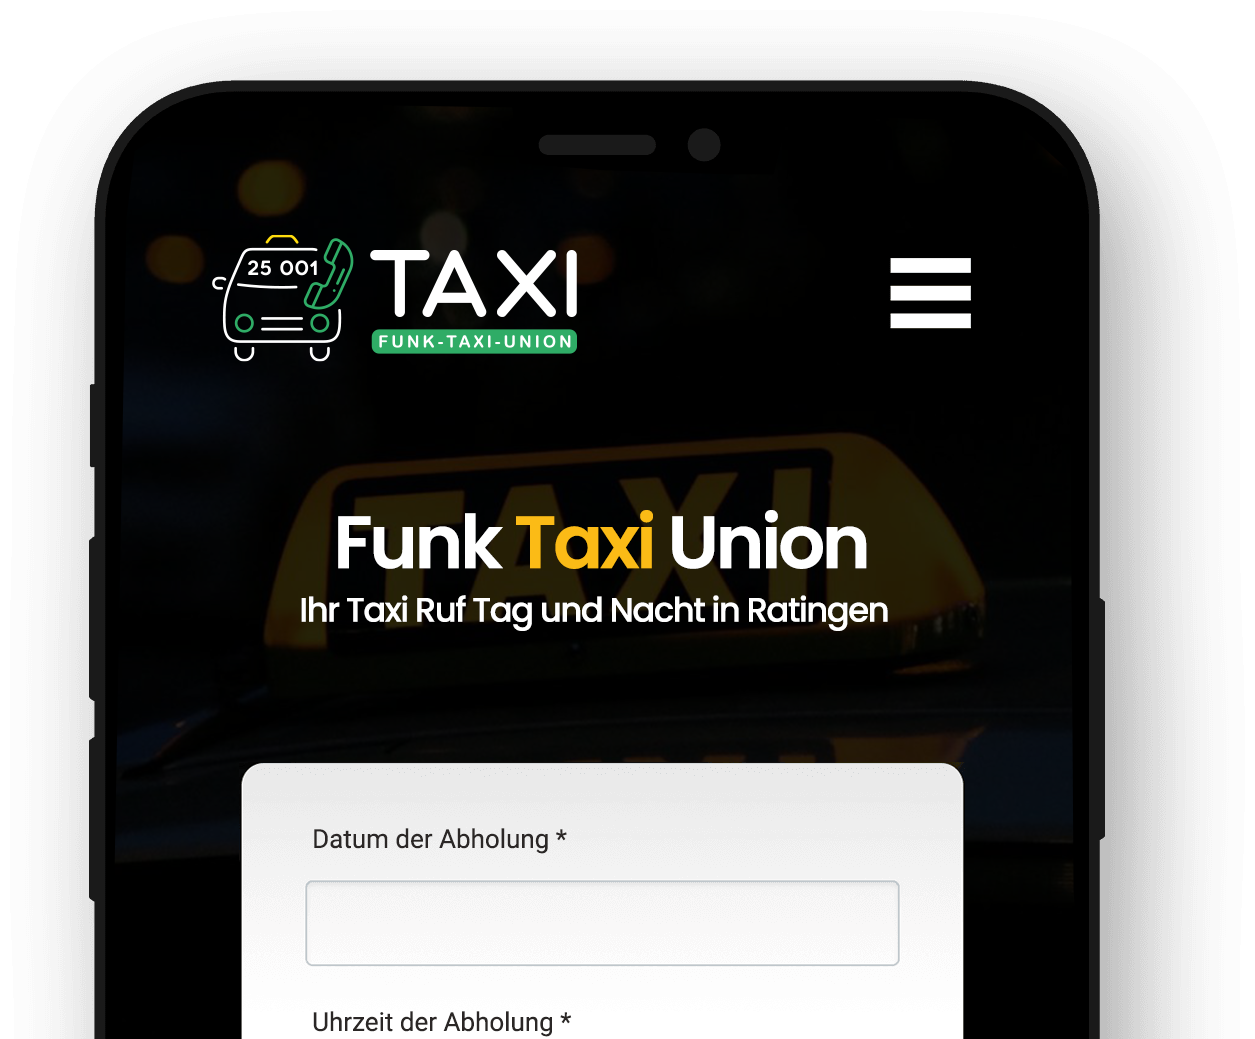 Funk-Taxi-Union Ratingen App